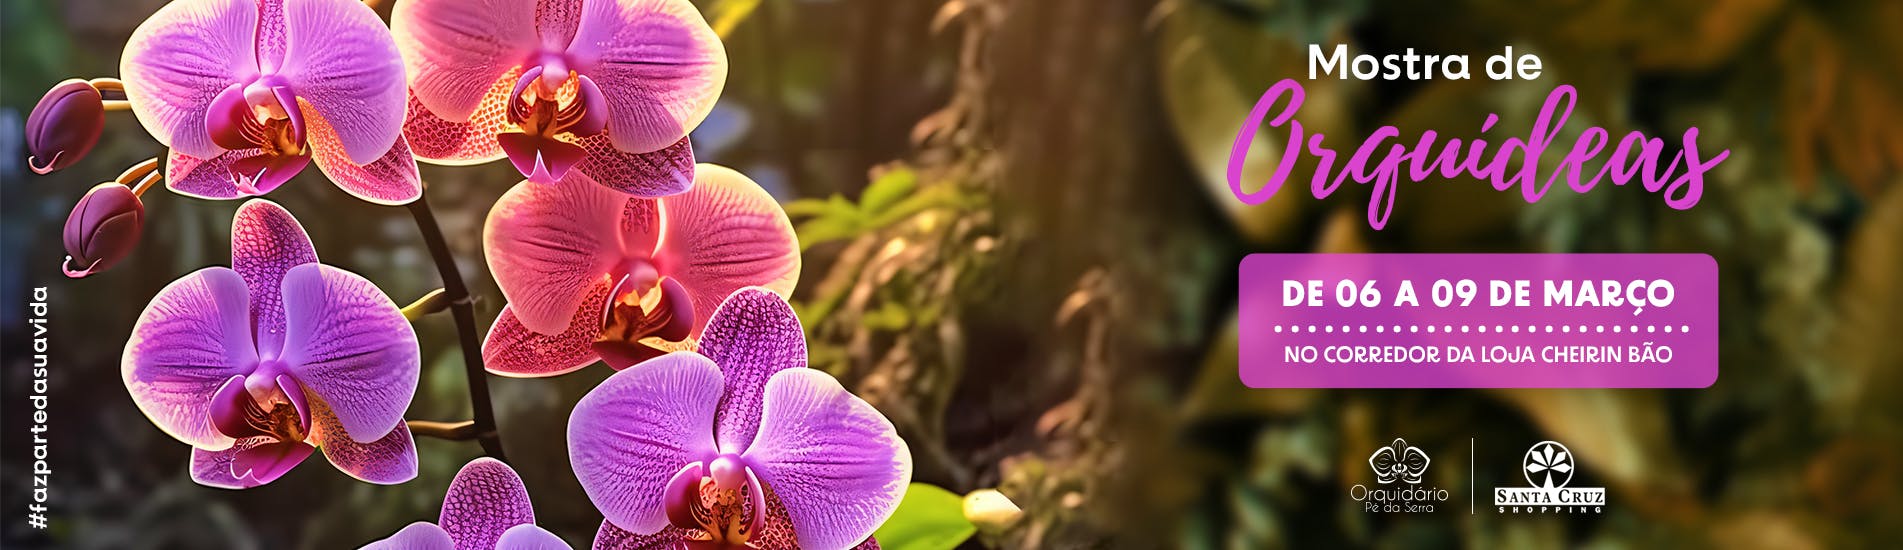 Mostra de Orquídeas